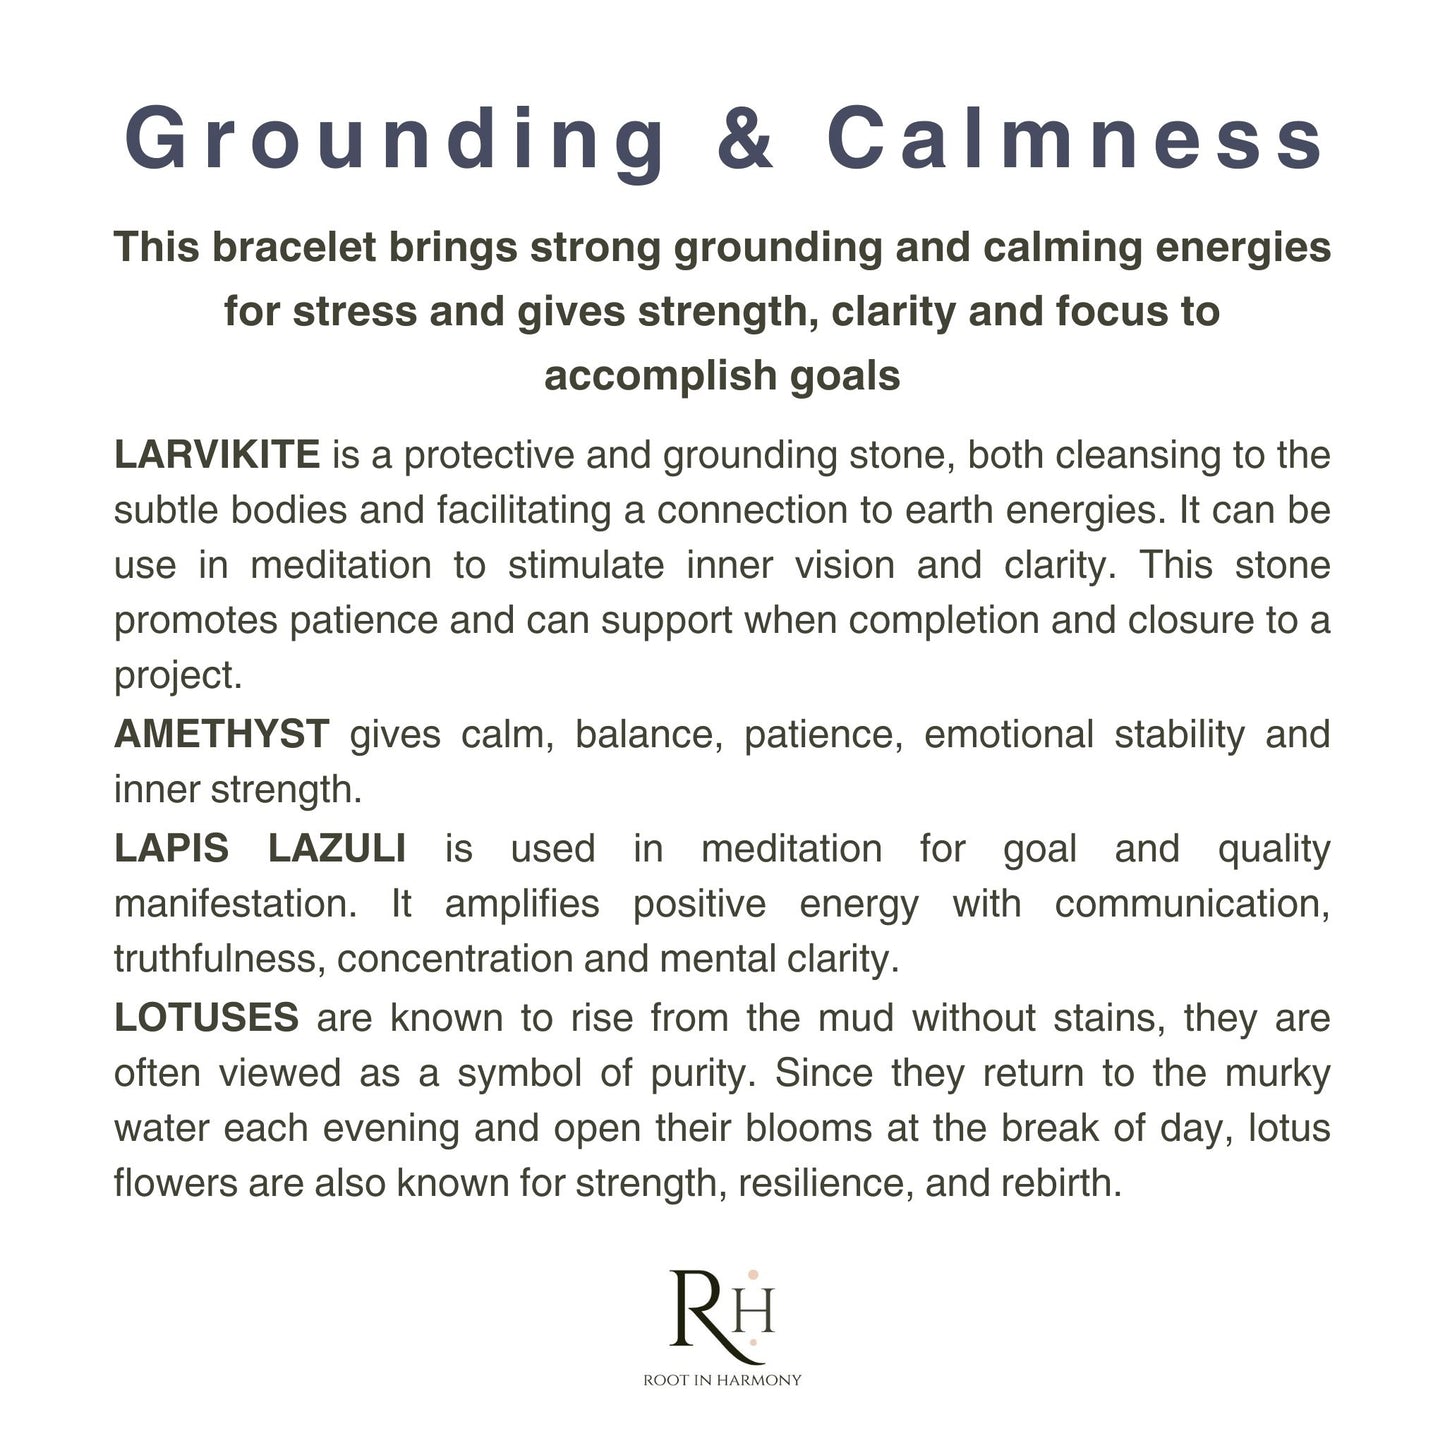 Grounding and calmness energy crystal bracelet meaning